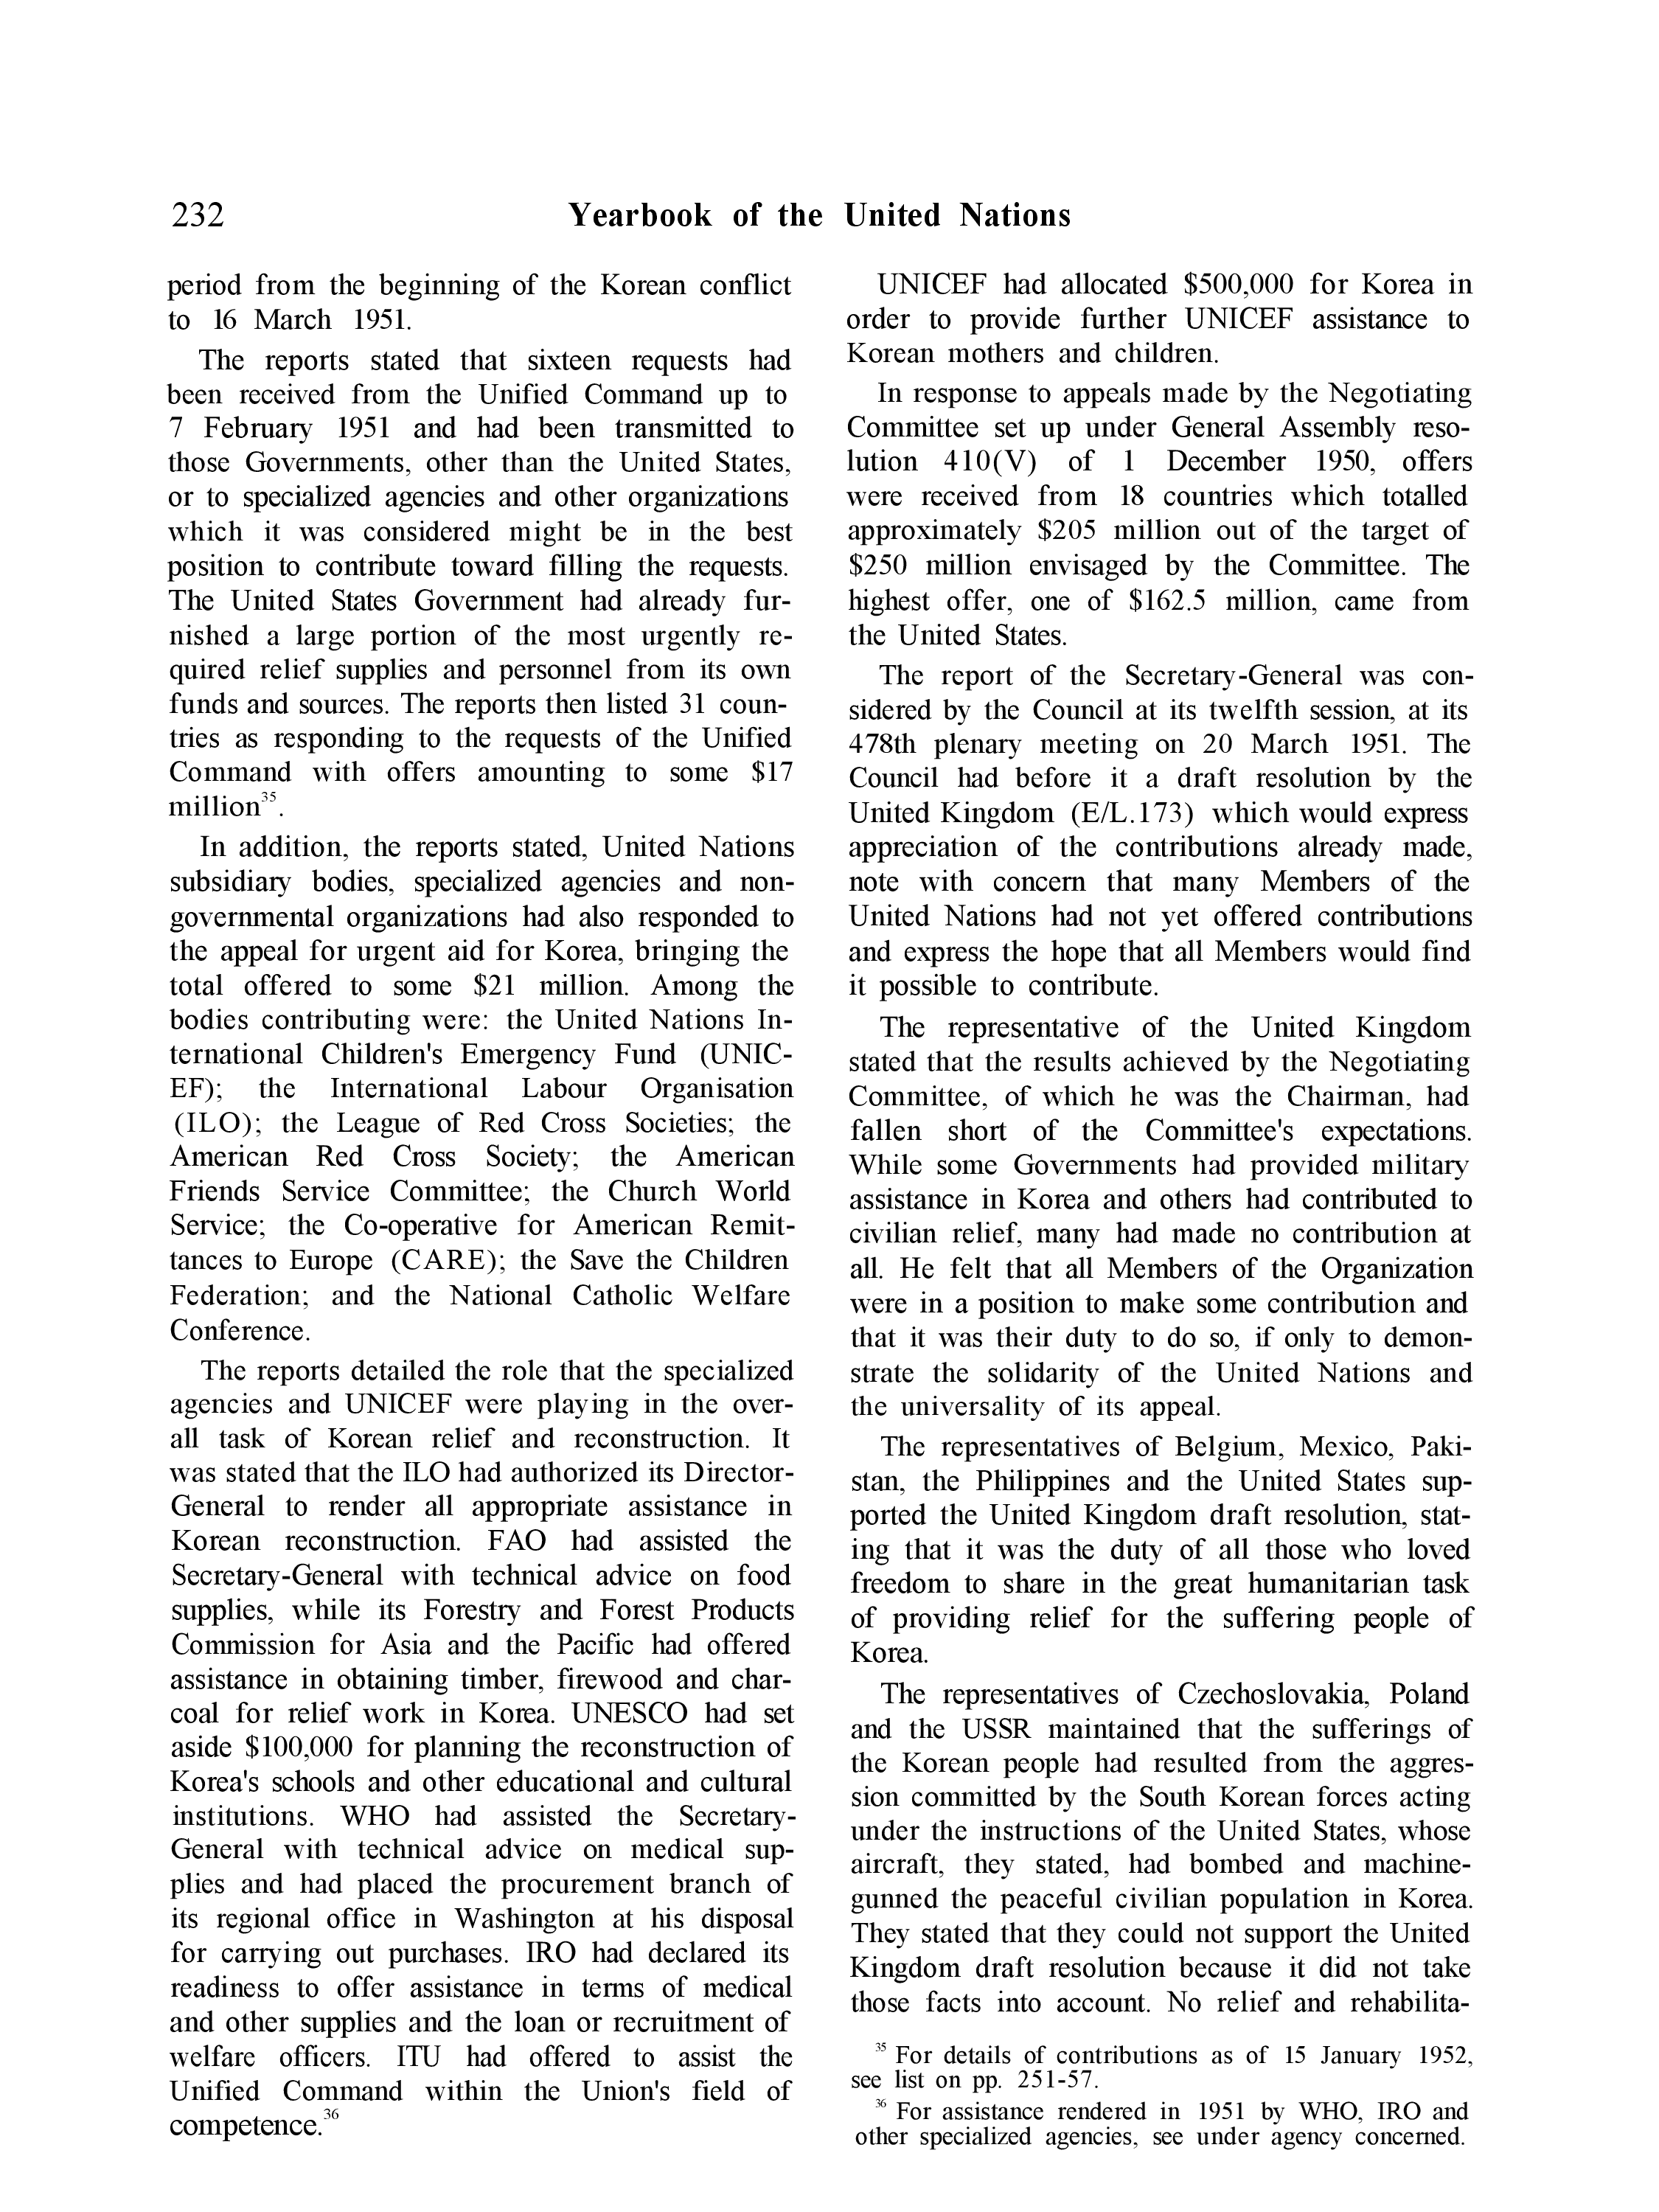 YUN Volume_Page 1951_242